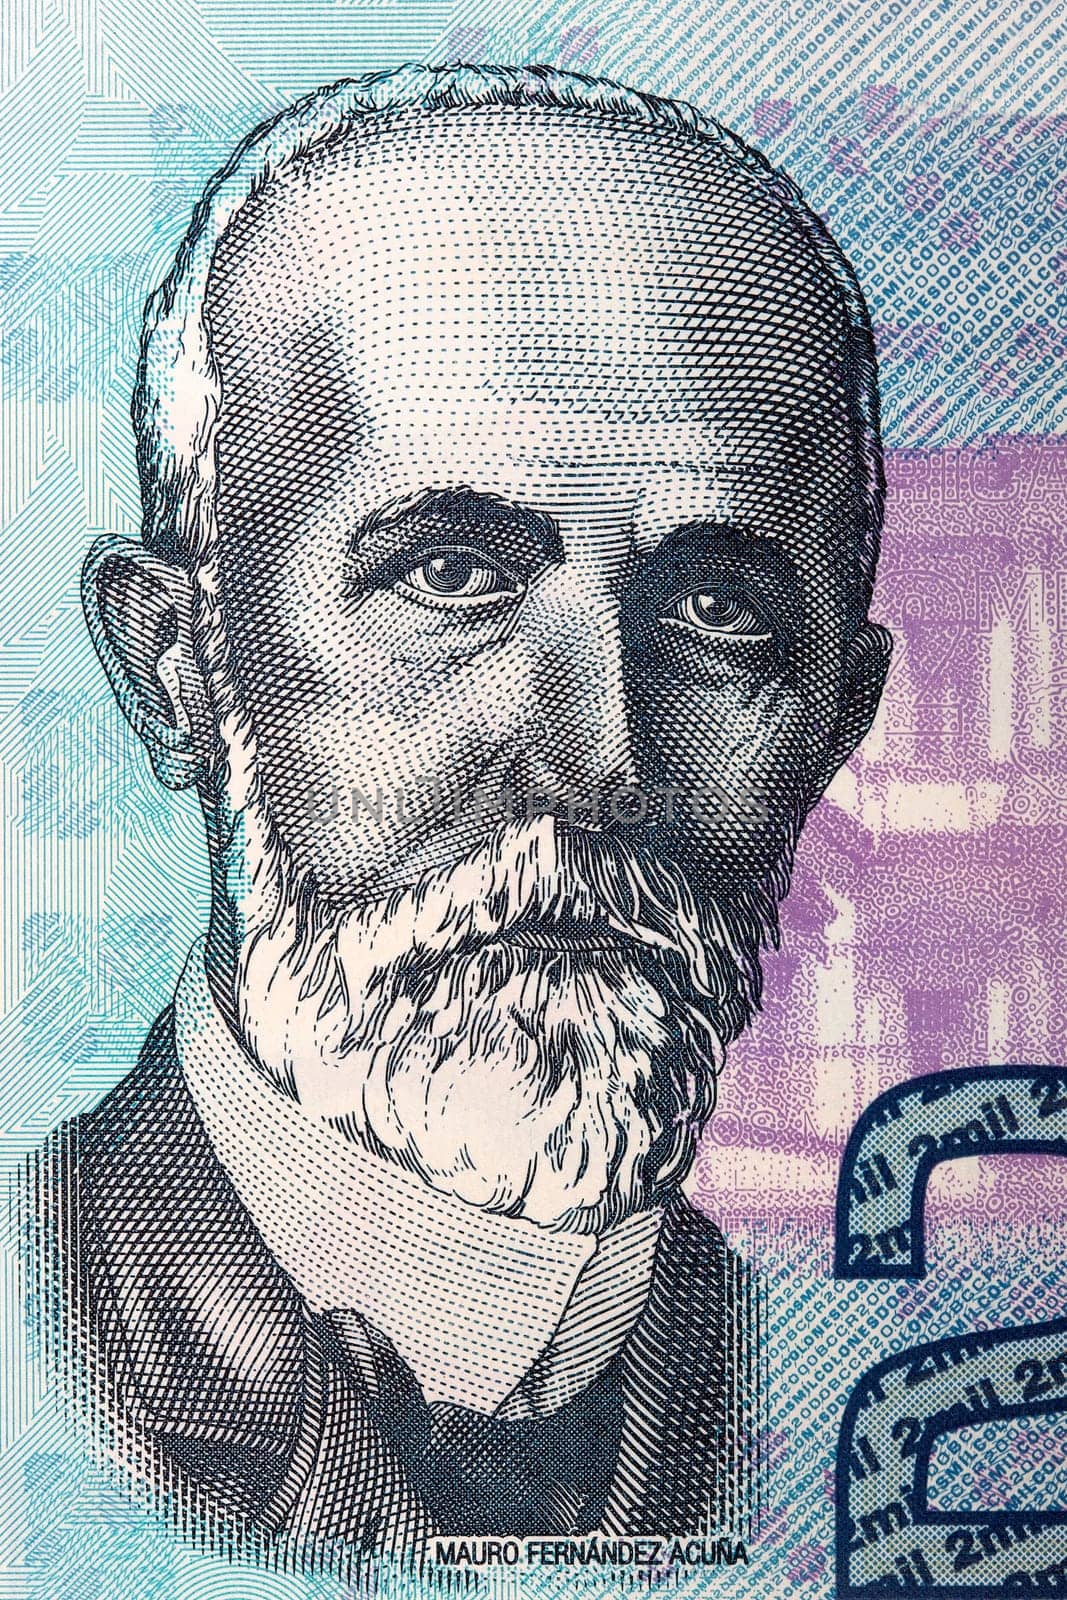 Mauro Fernandez Acuna a portrait from Costa Rican money by johan10